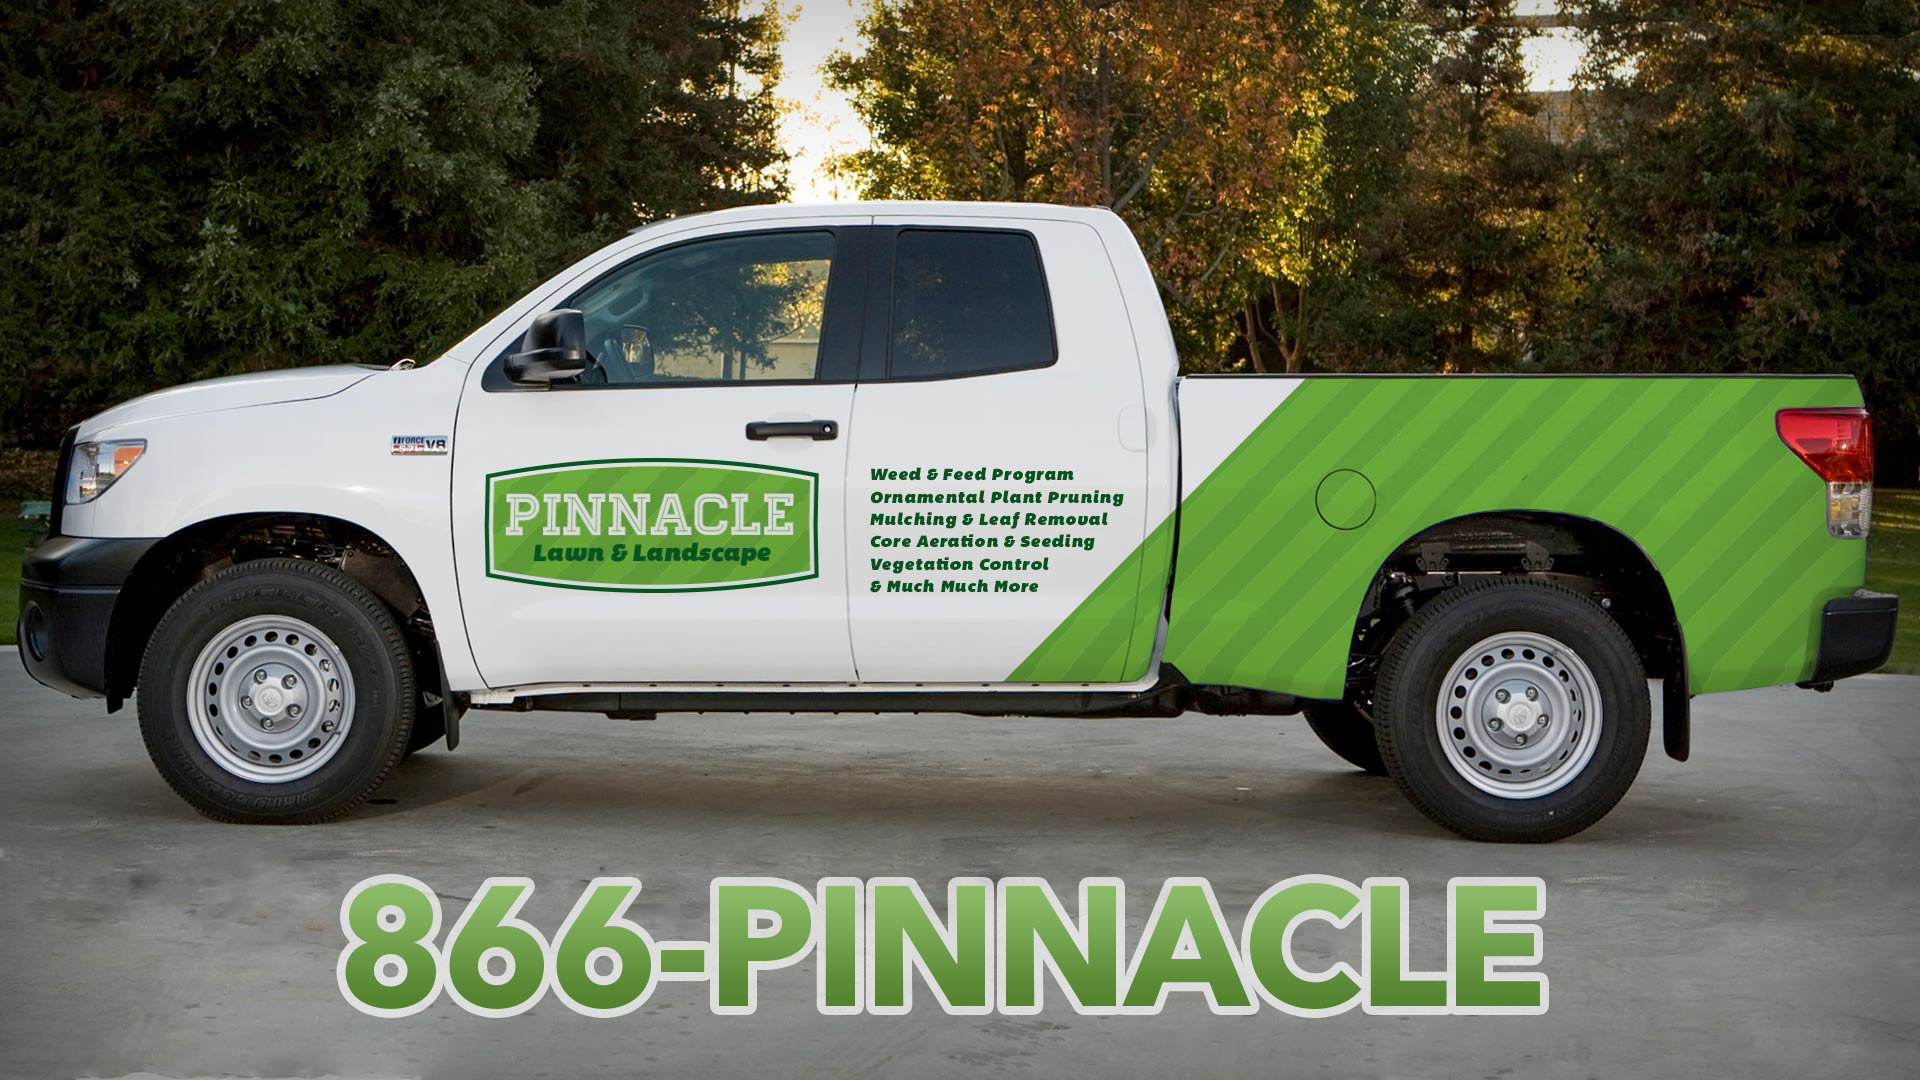 Pinnacle Lawn and Landscape truck using 1-866-PINNACLE